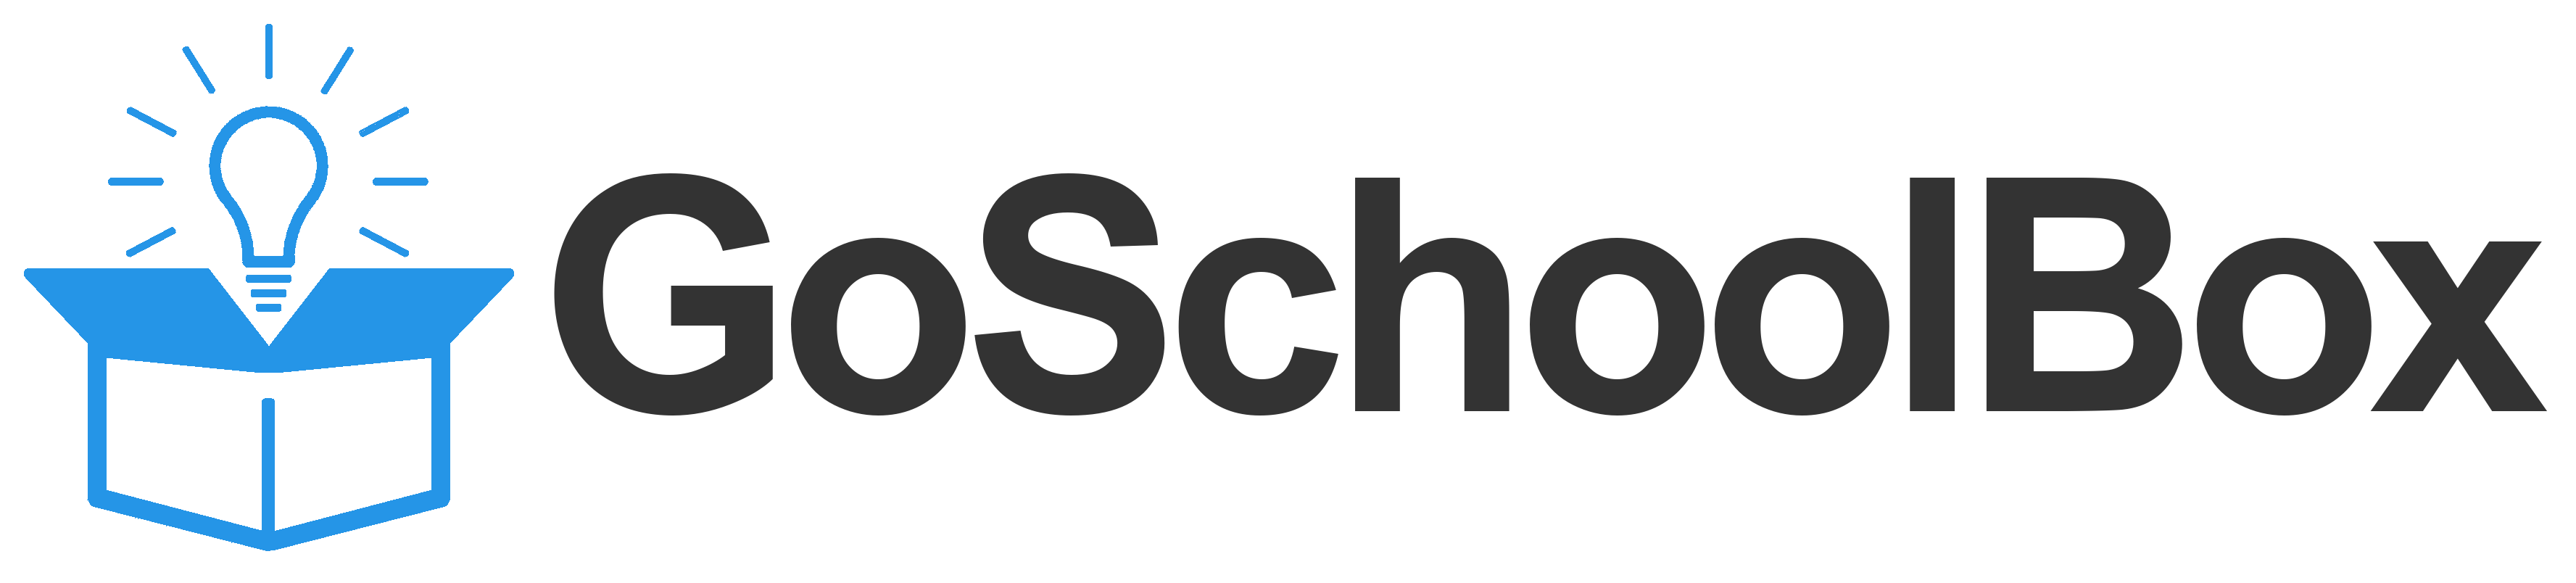 goschoolbox_long_logo